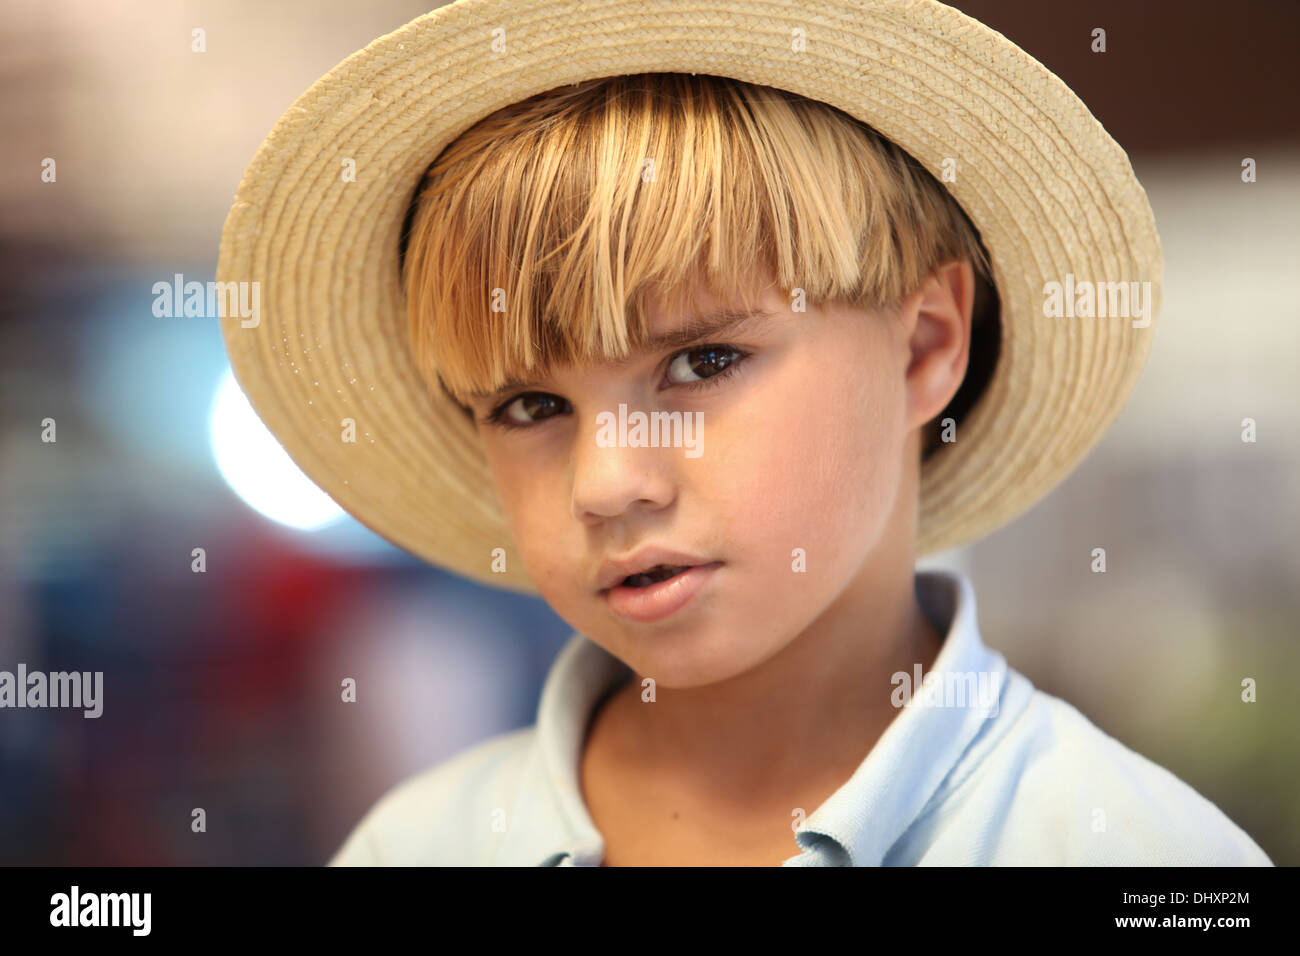 Blond boy with straw hat Stock Photo